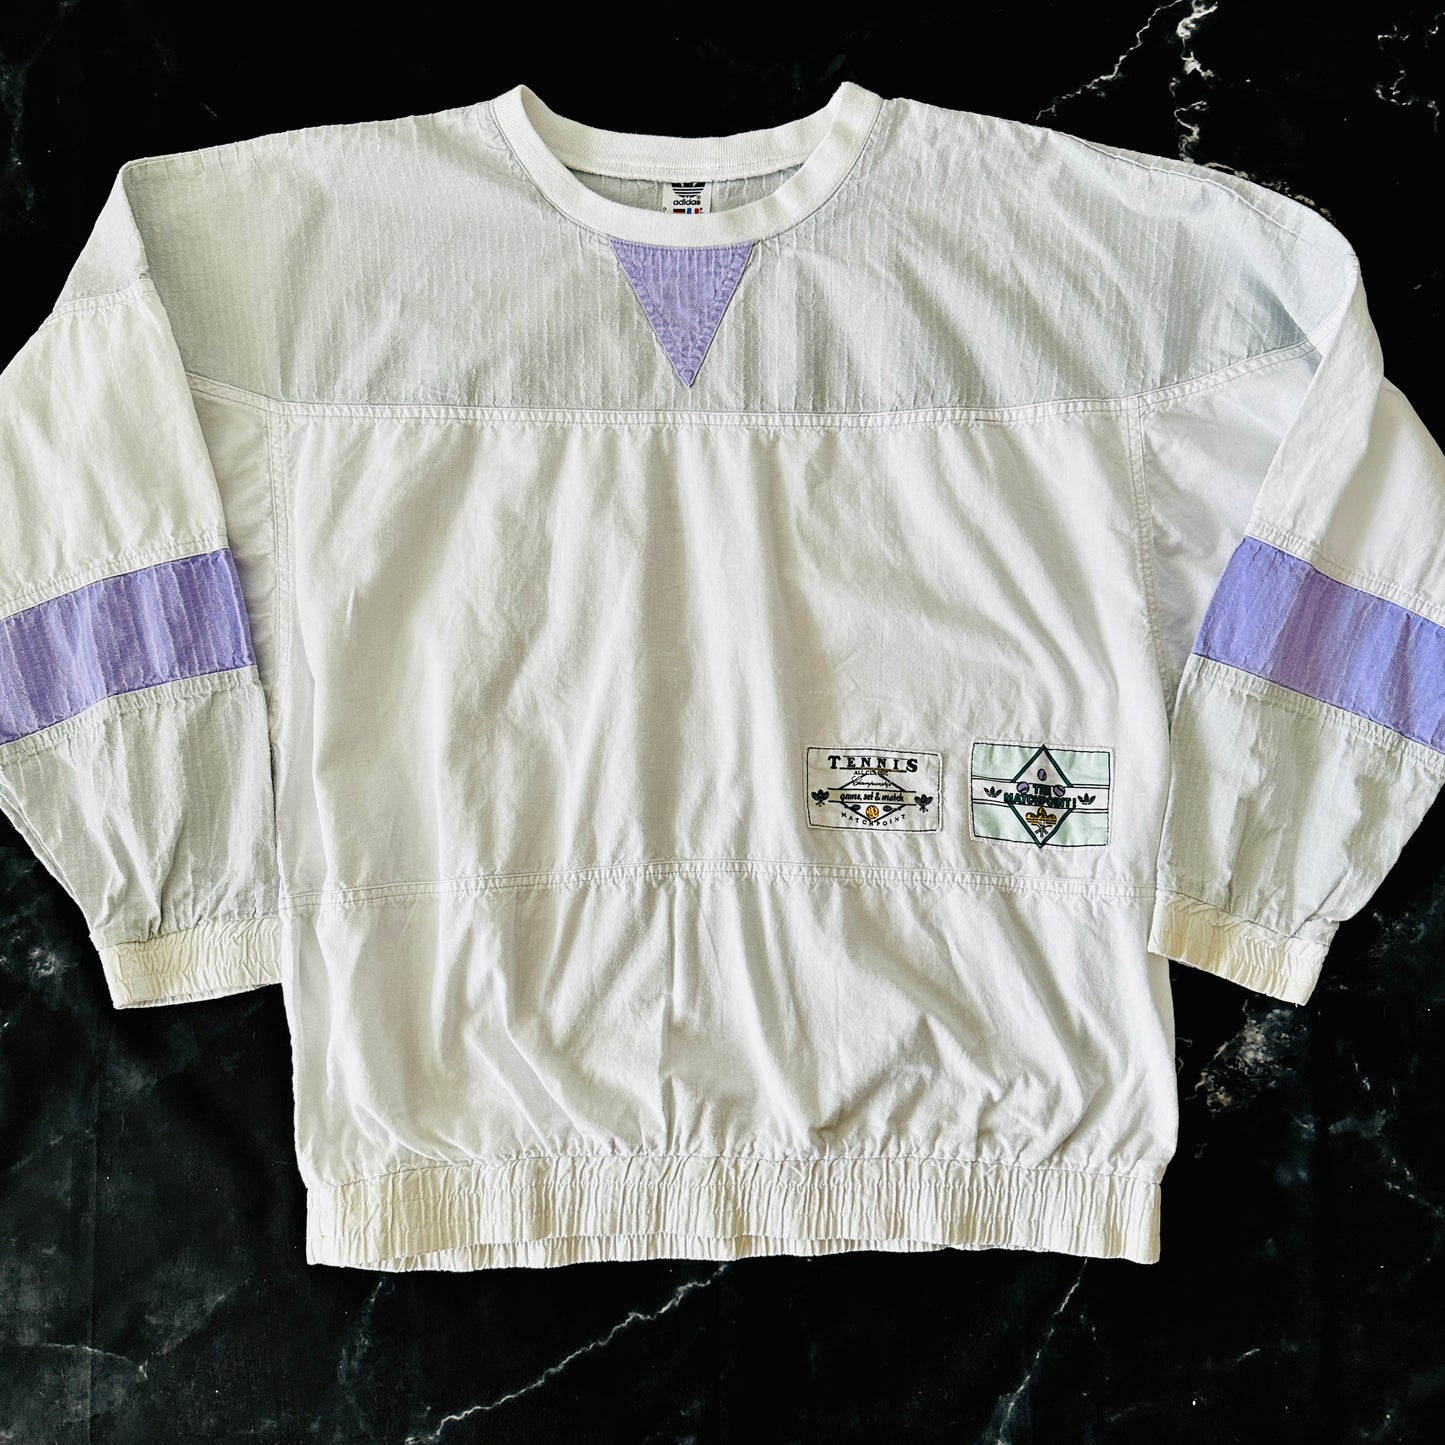 Adidas Tennis Vintage 80s Sweatshirt - 7 / XL